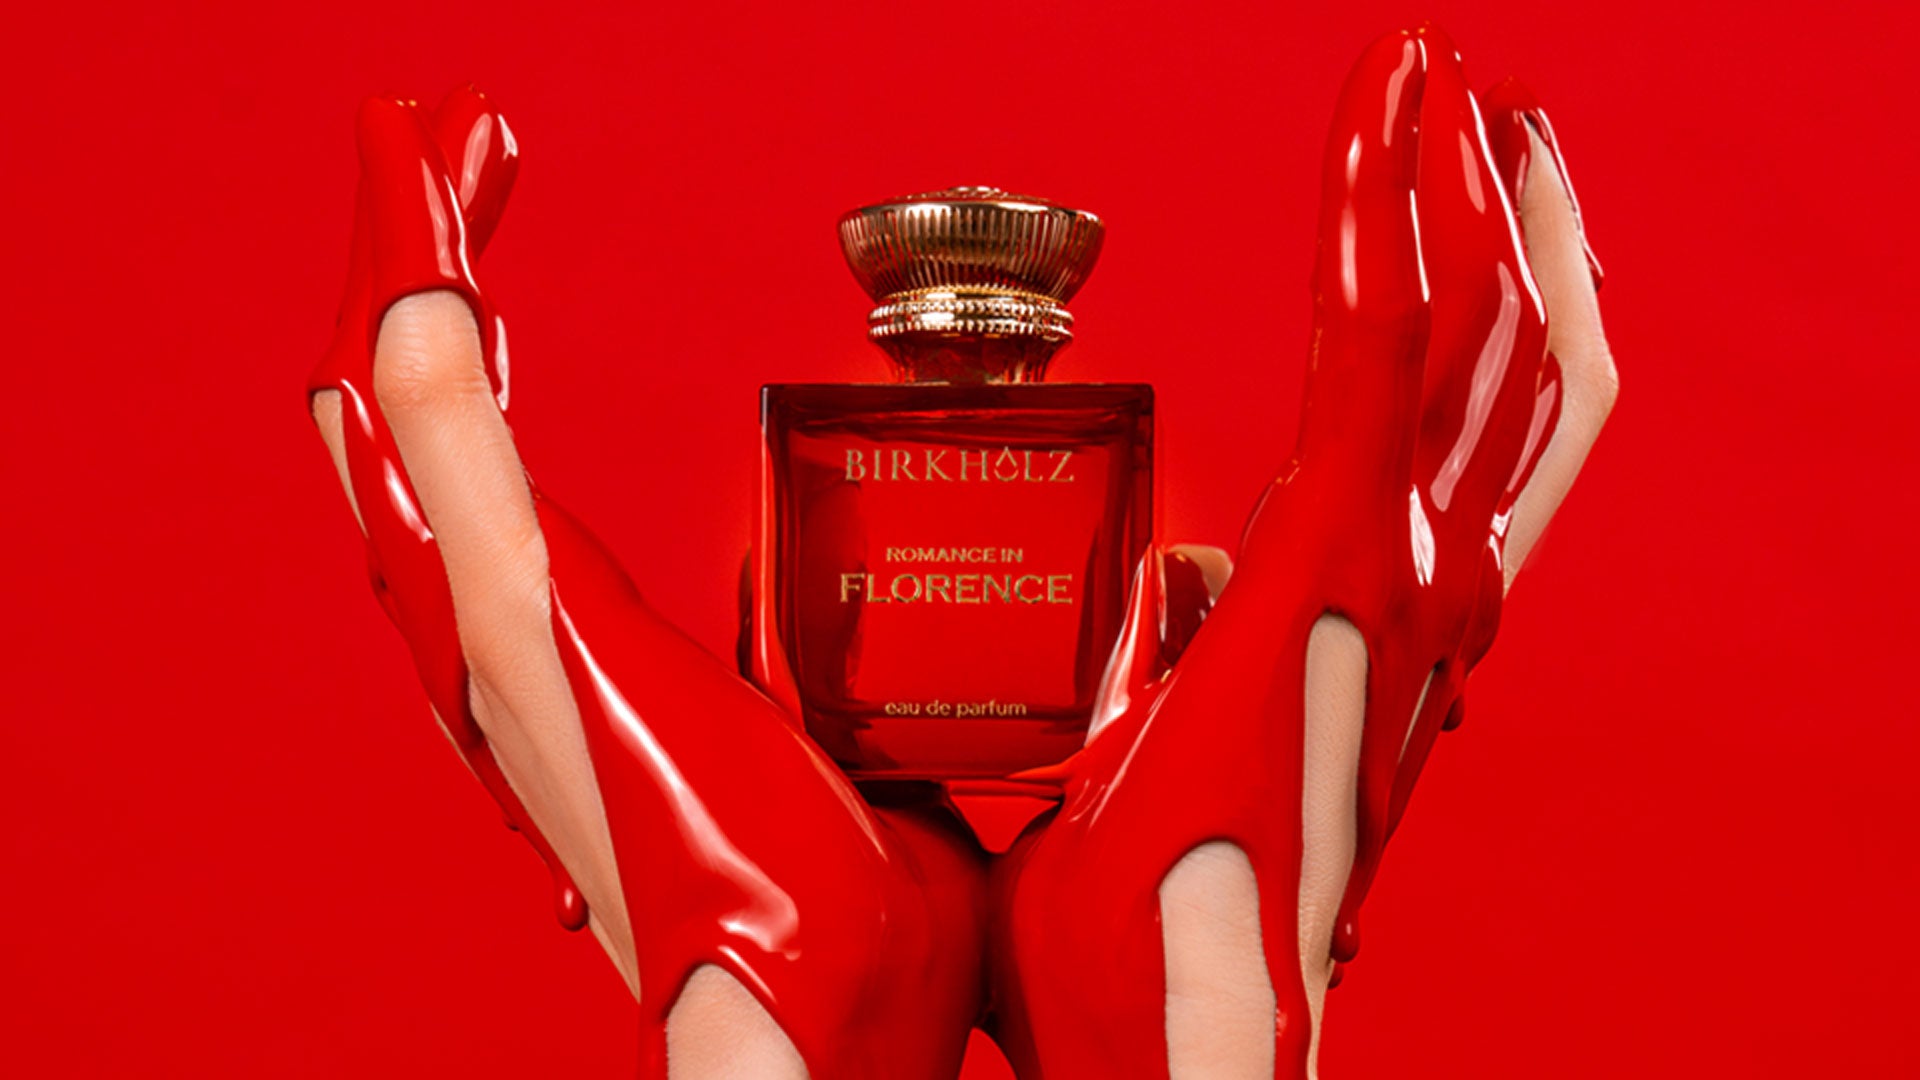 Romance in Florence Parfum